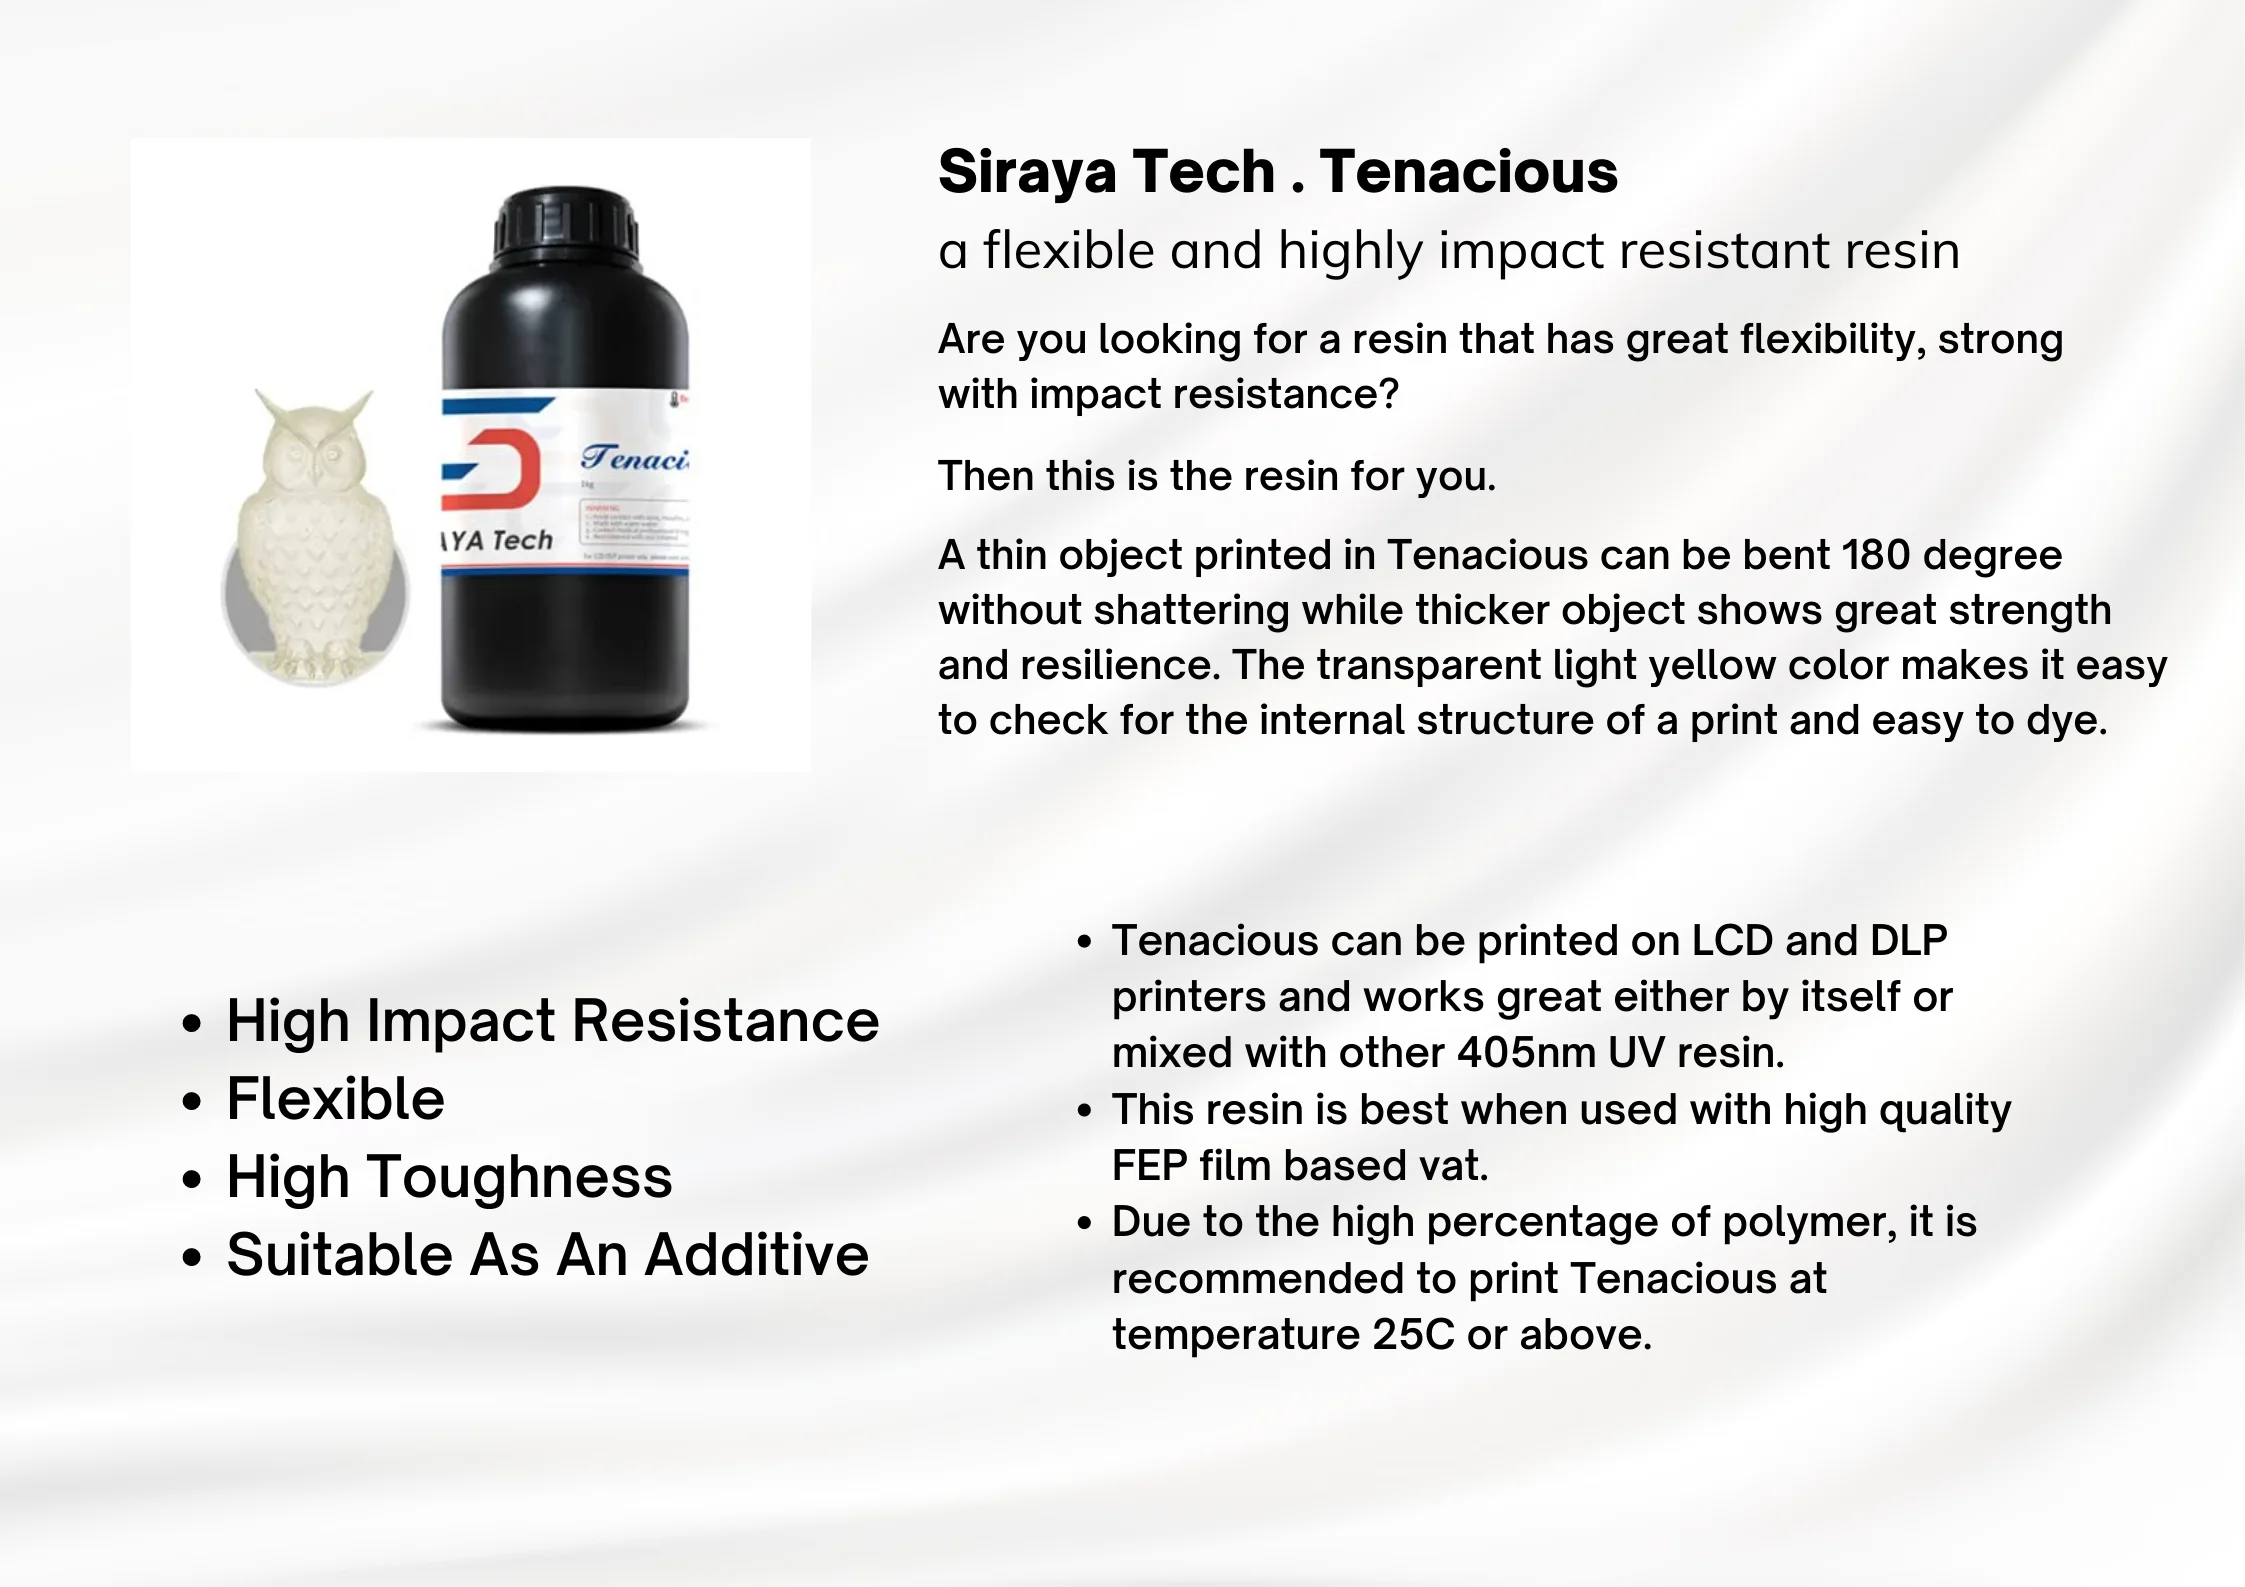 Siraya Tech Tenacious Resin Flexible 405nm UV-Curing with High